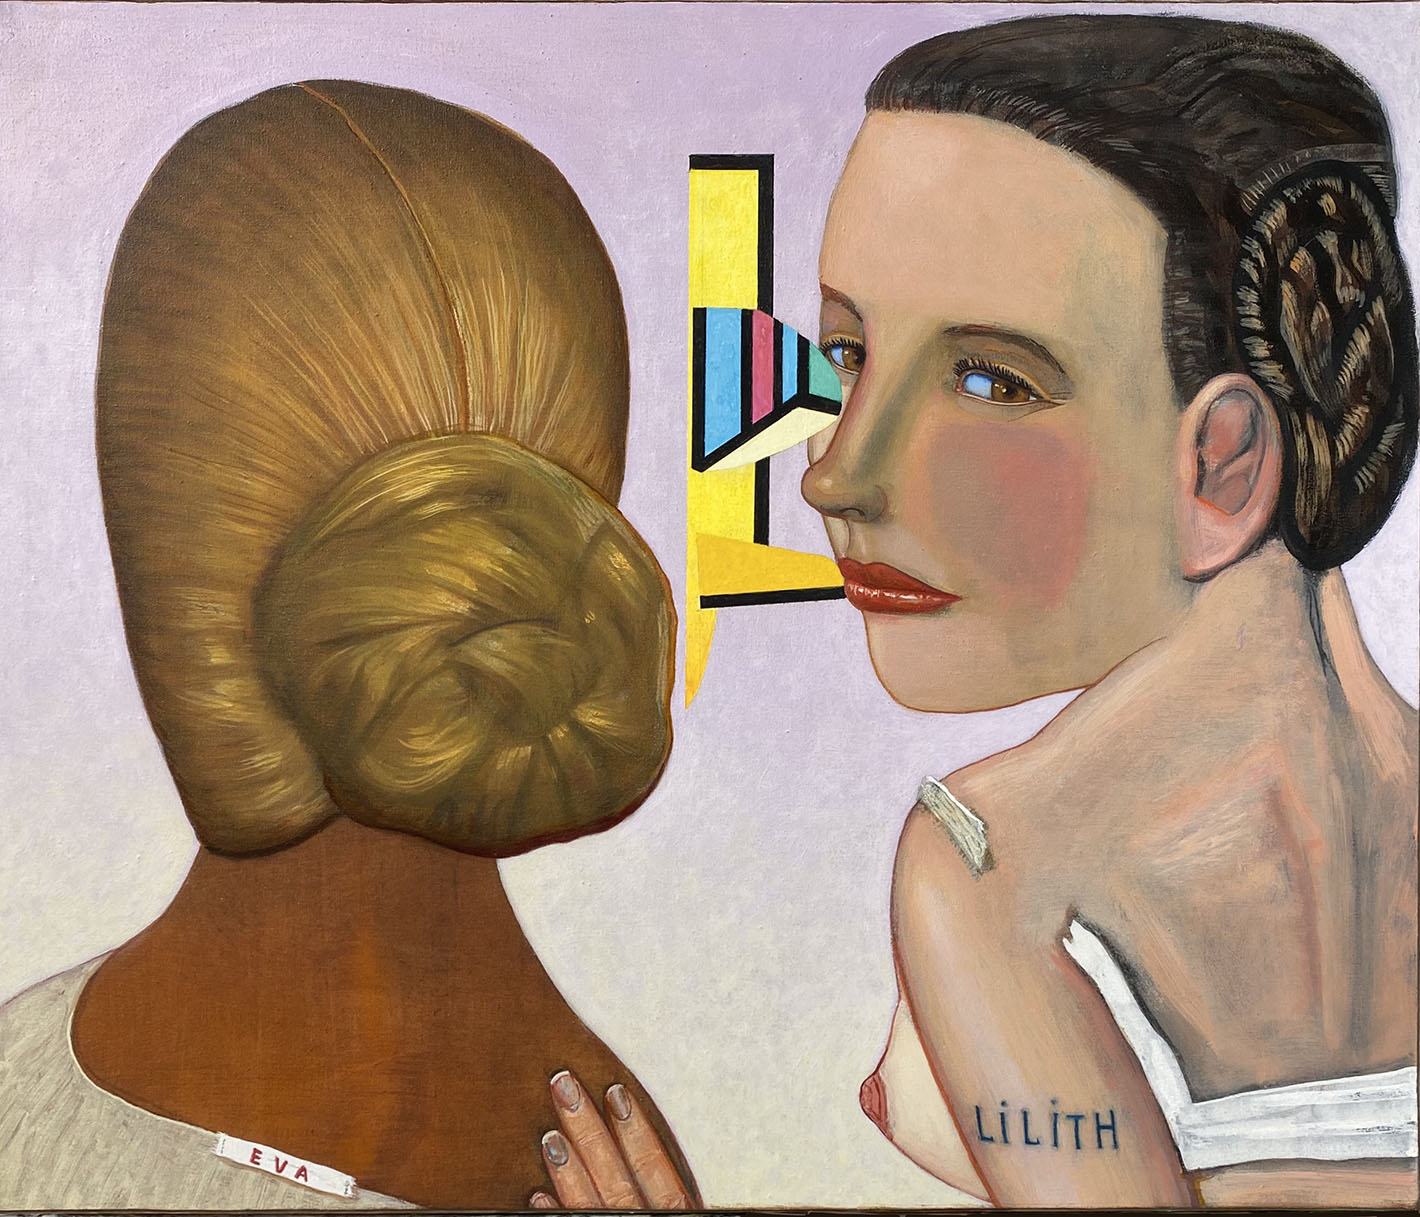 Pat Andrea, Eva et Lilith, oil and casein paint on canvas, 46 x 55 cm, 2021